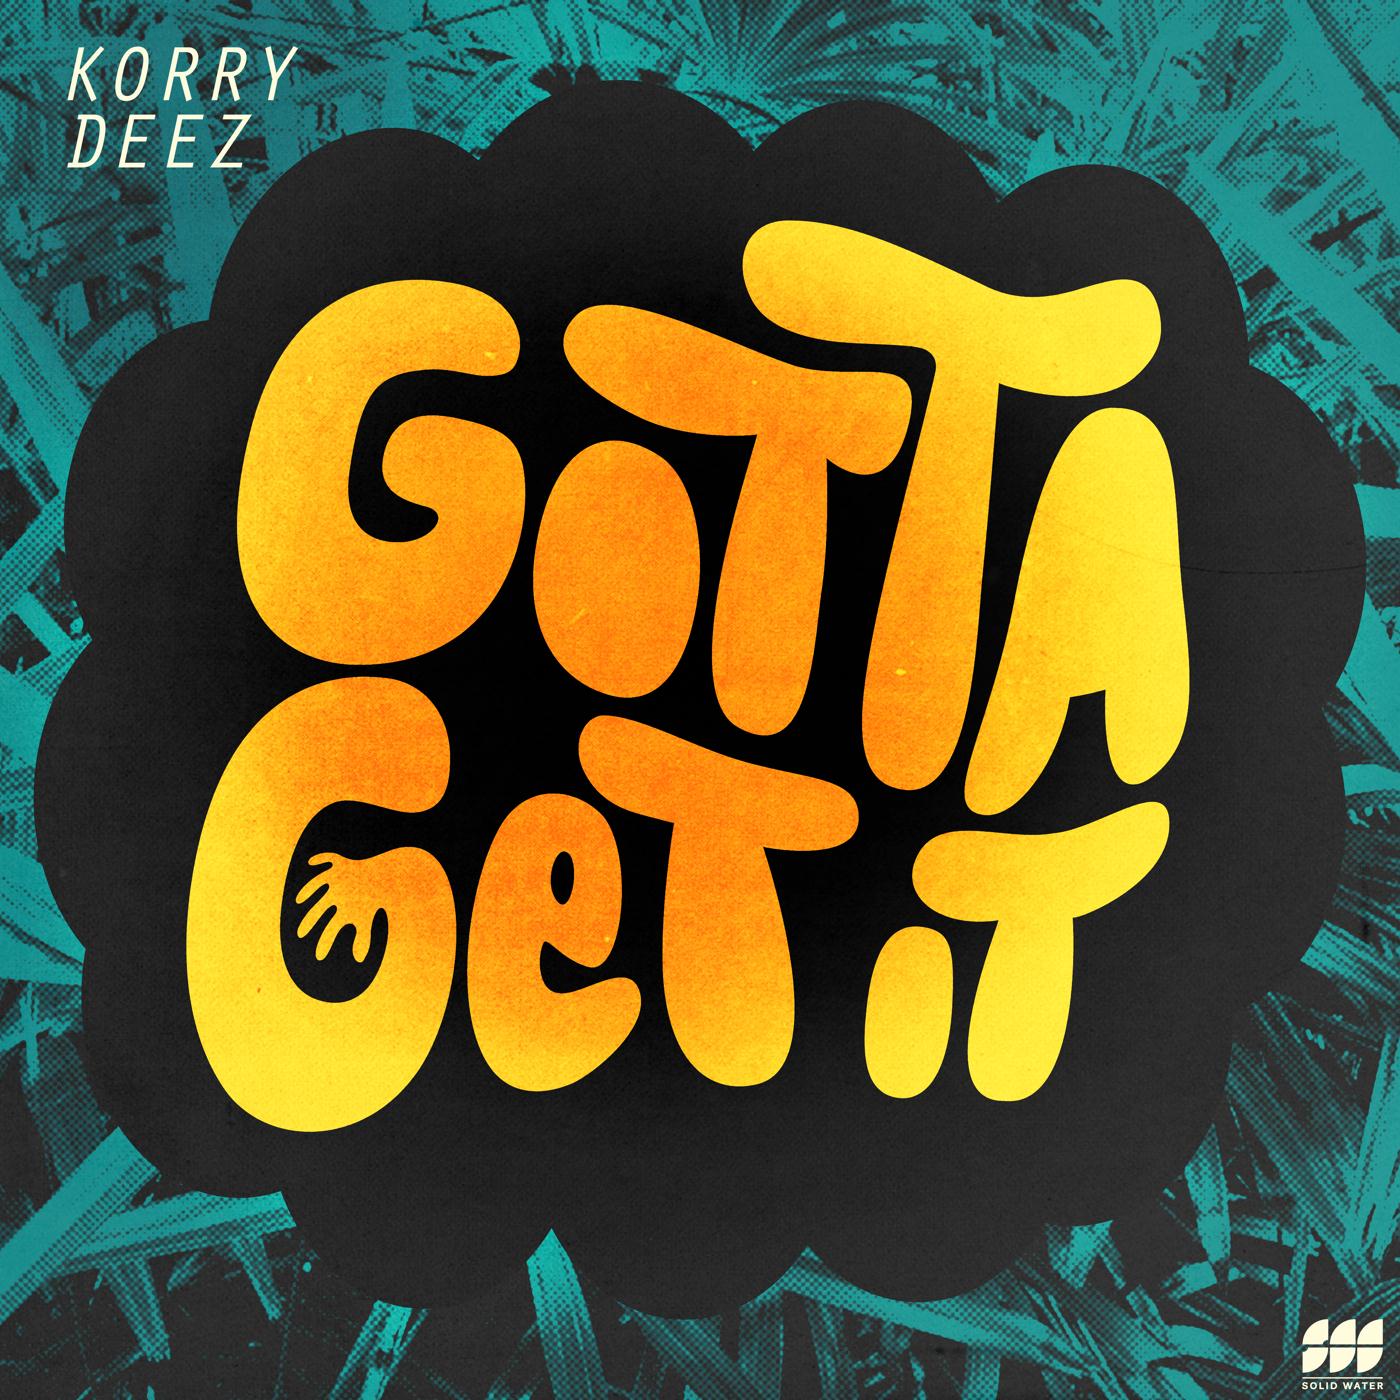 Korry Deez "Gotta Get It 1.0" Video | @korrydeez